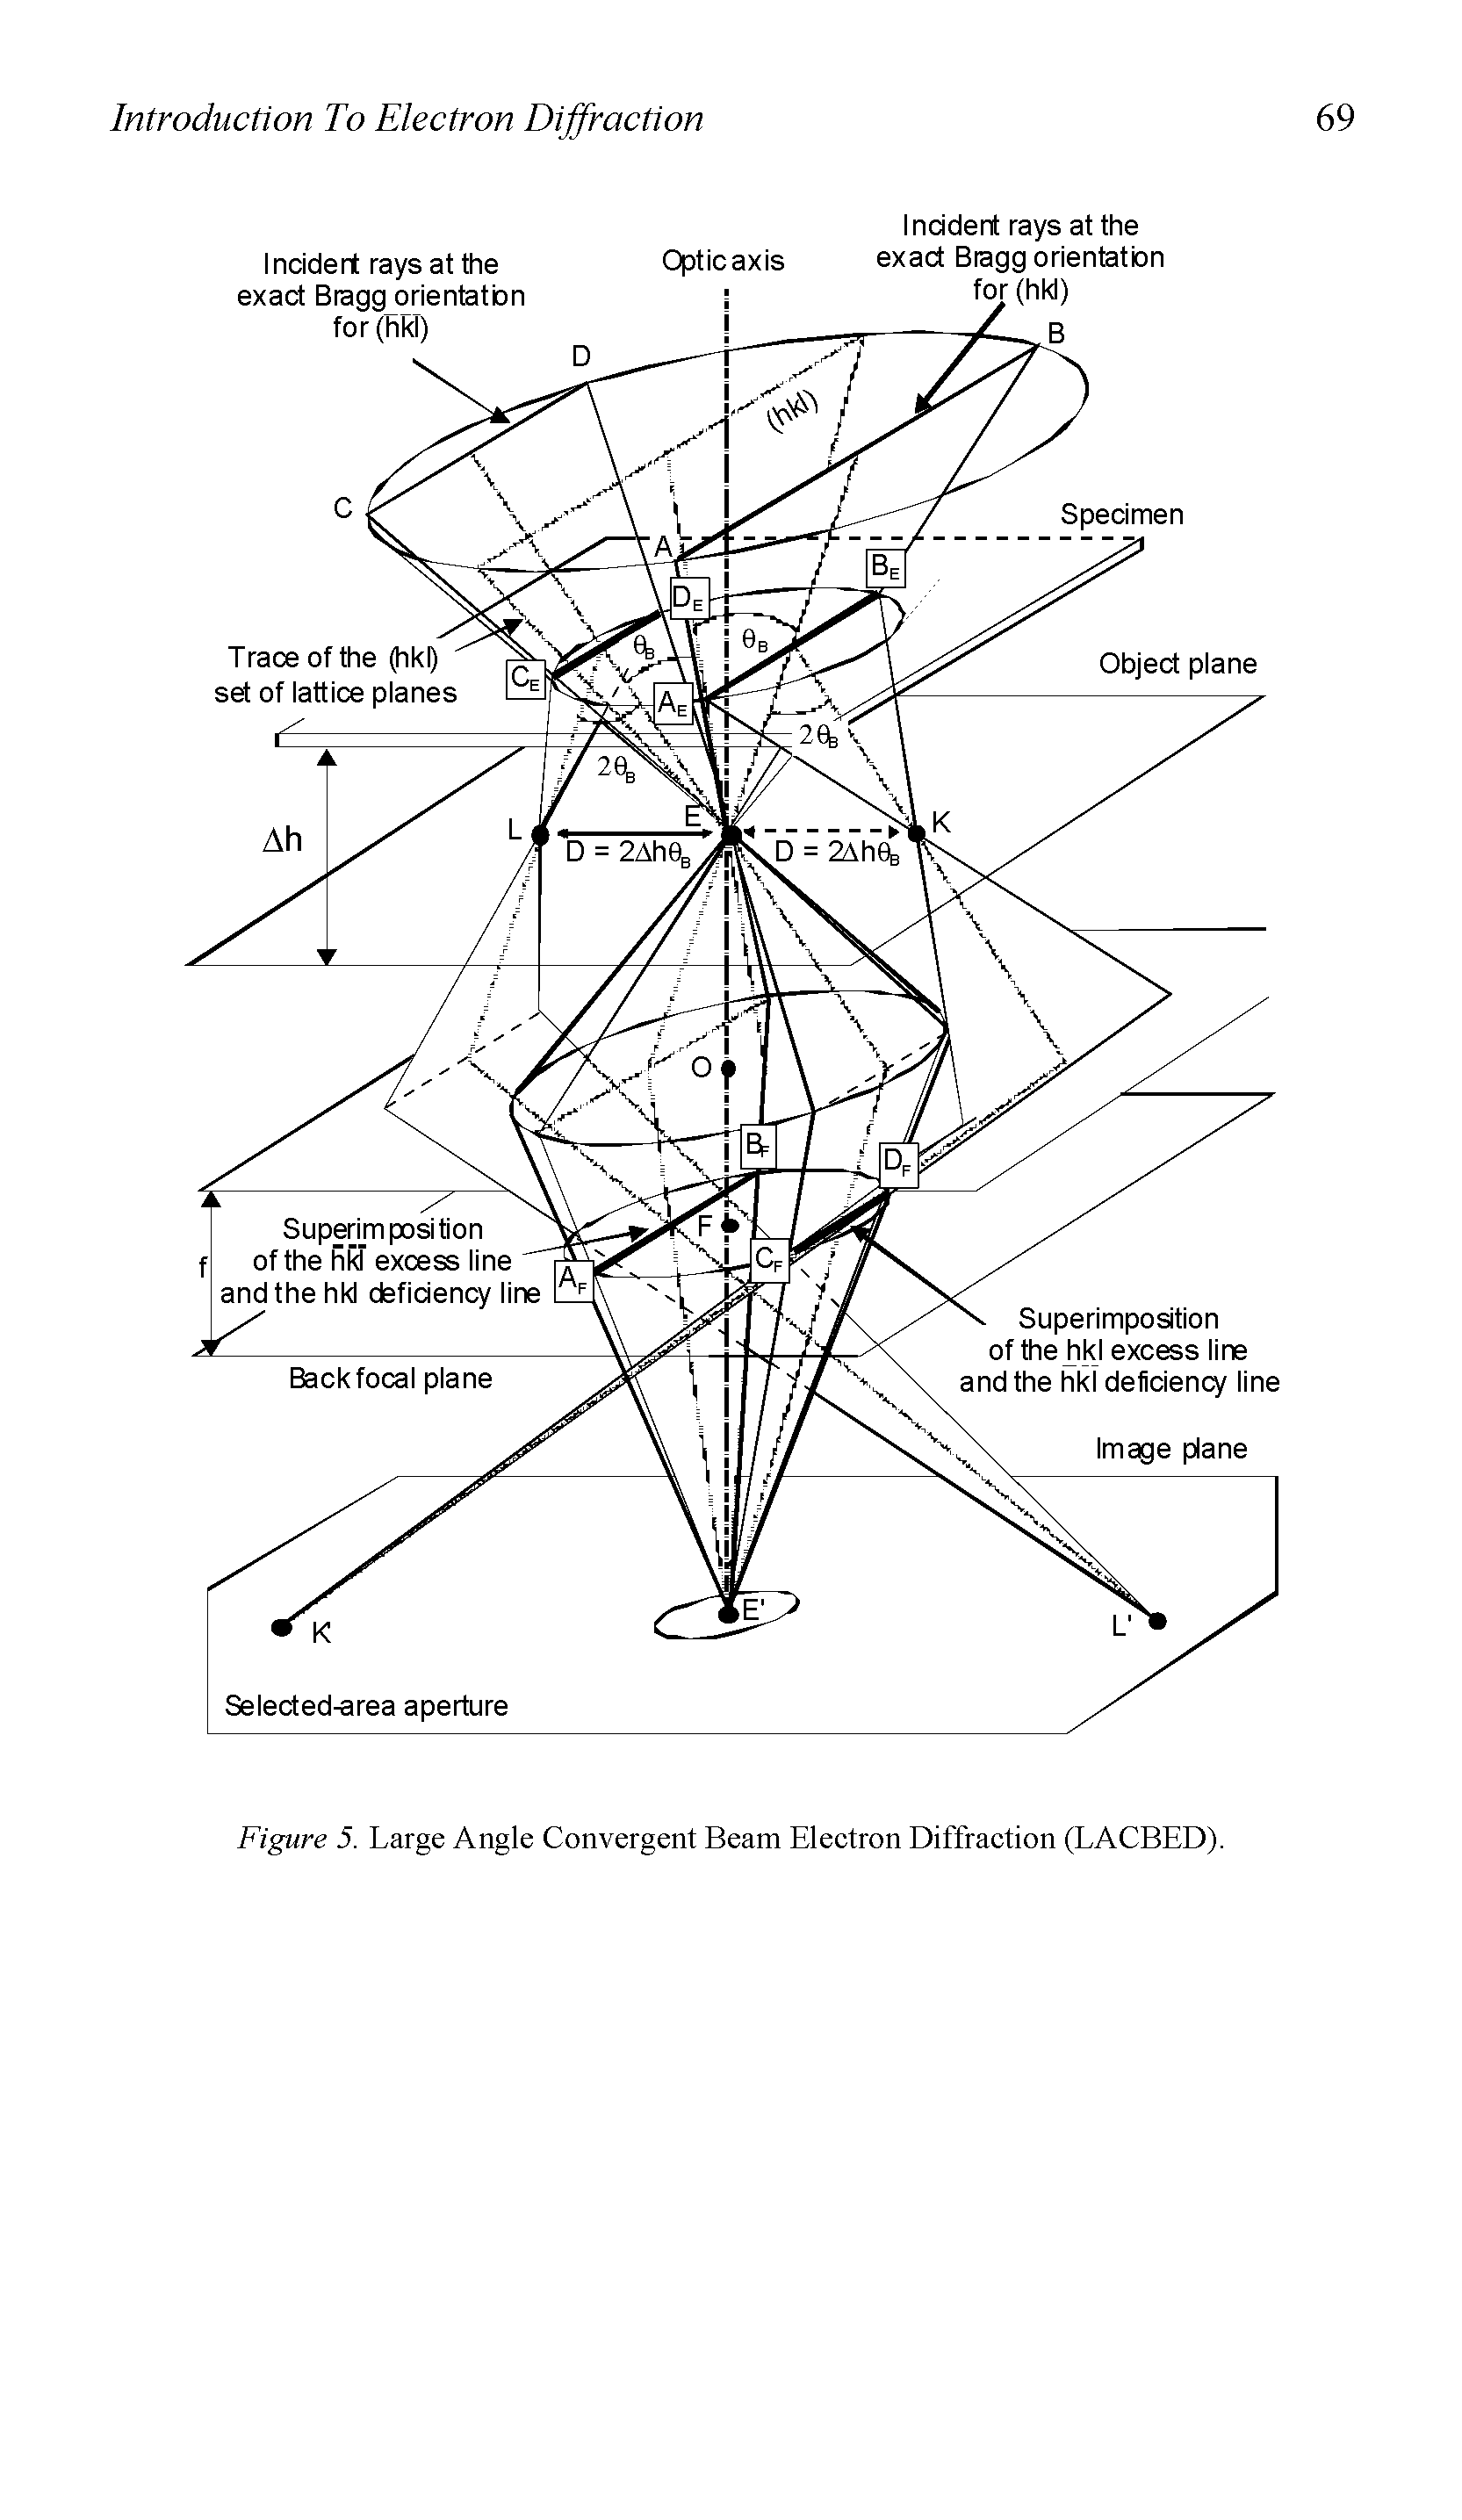 Figure 5. Large Angle Convergent Beam Eleetron Diffraetion (LACBED).